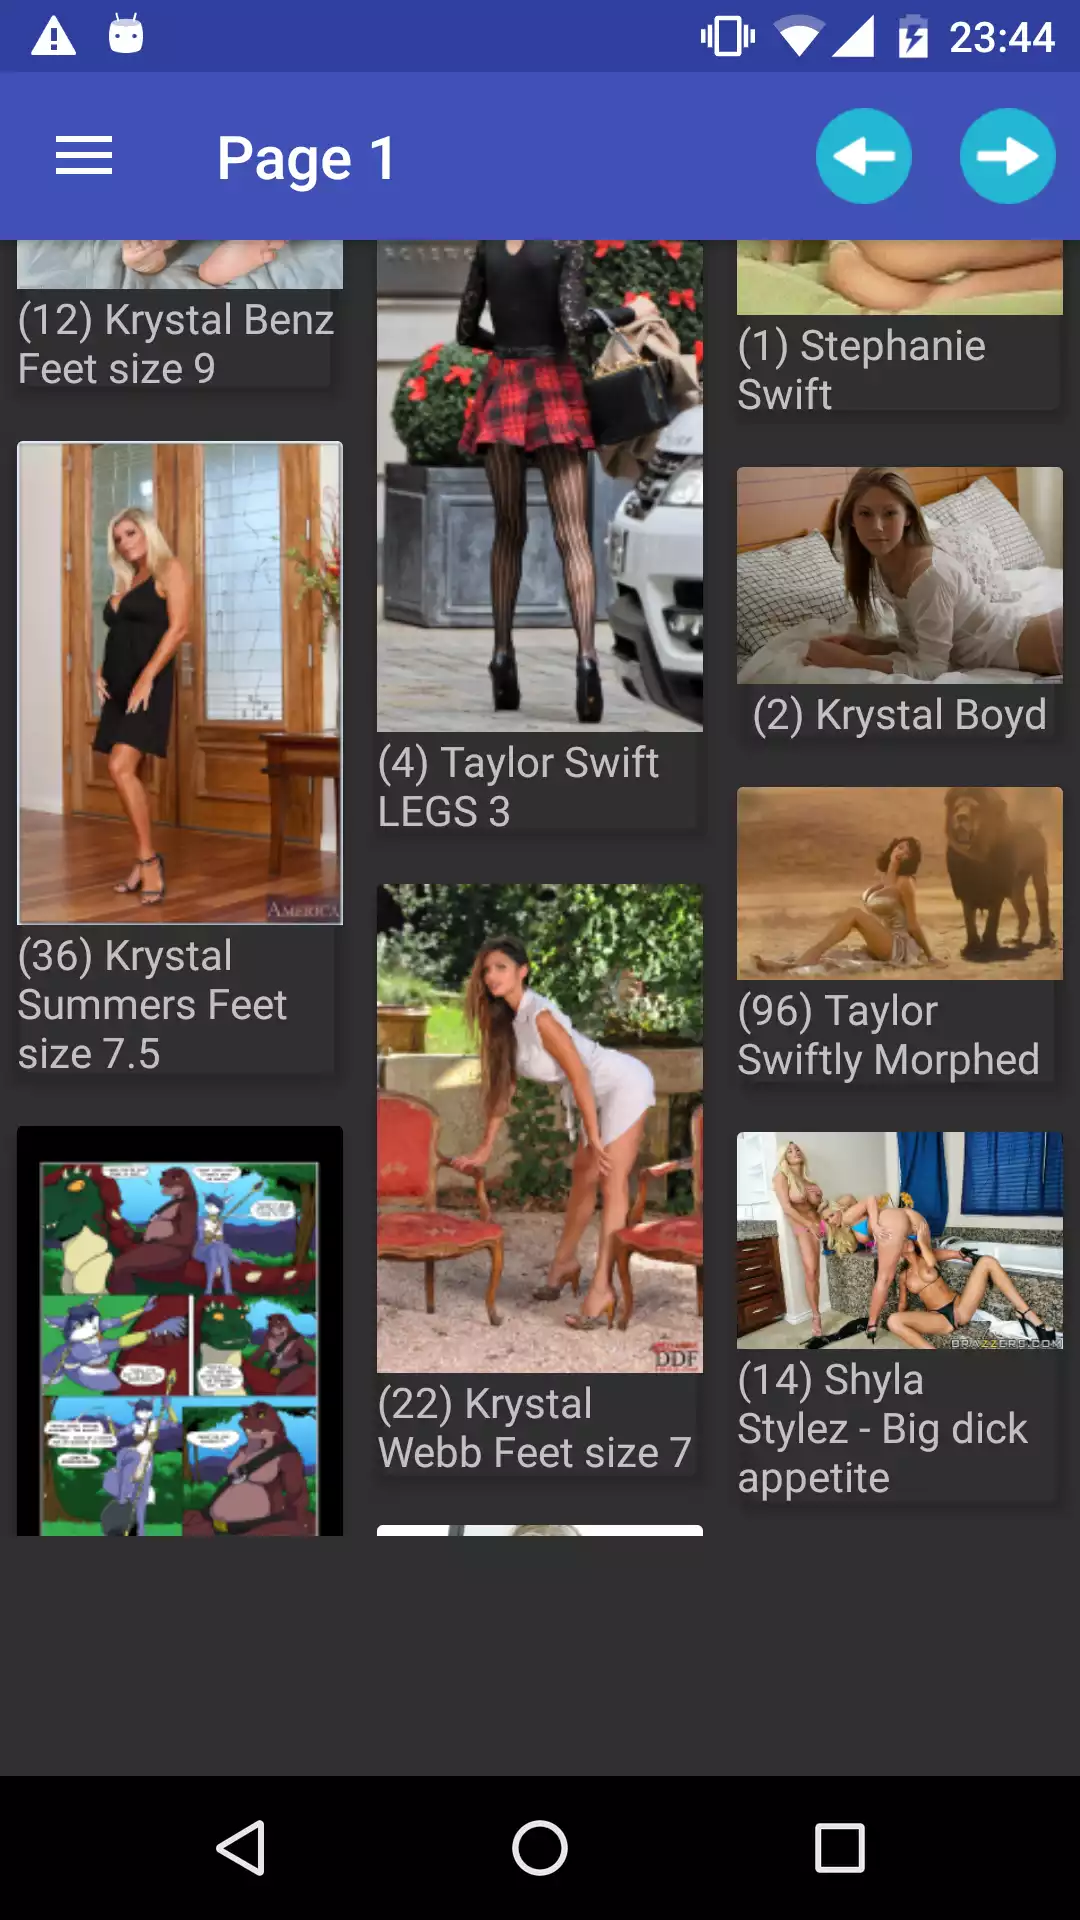 krystal-swift wallpapers,sexy,backgrounds,jpg,henati,panties,erotic,wallpaper,porn,anime,hentai,pornstar,photo,updates,pics,android,galleries,apps,gallery,app,apk,henti